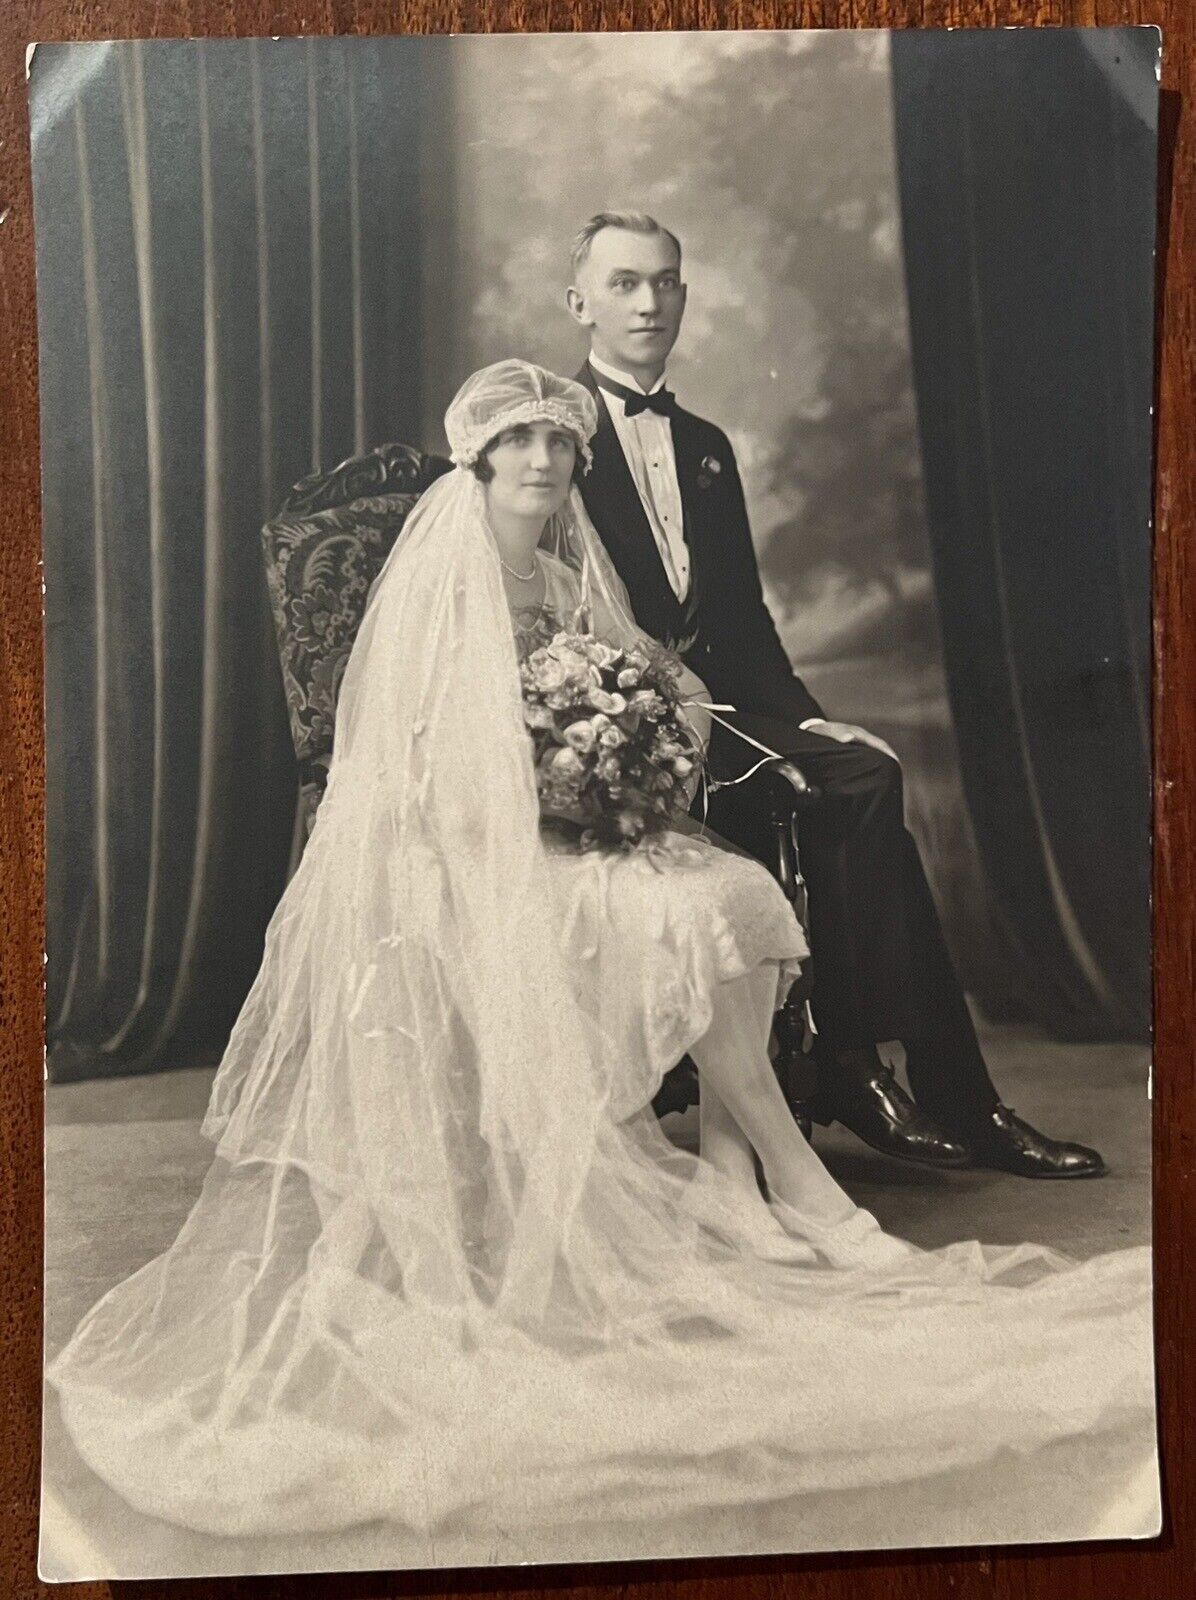 VTG 1920's Formal Wedding Portrait Flapper Bride Headpiece Crossed Ankles